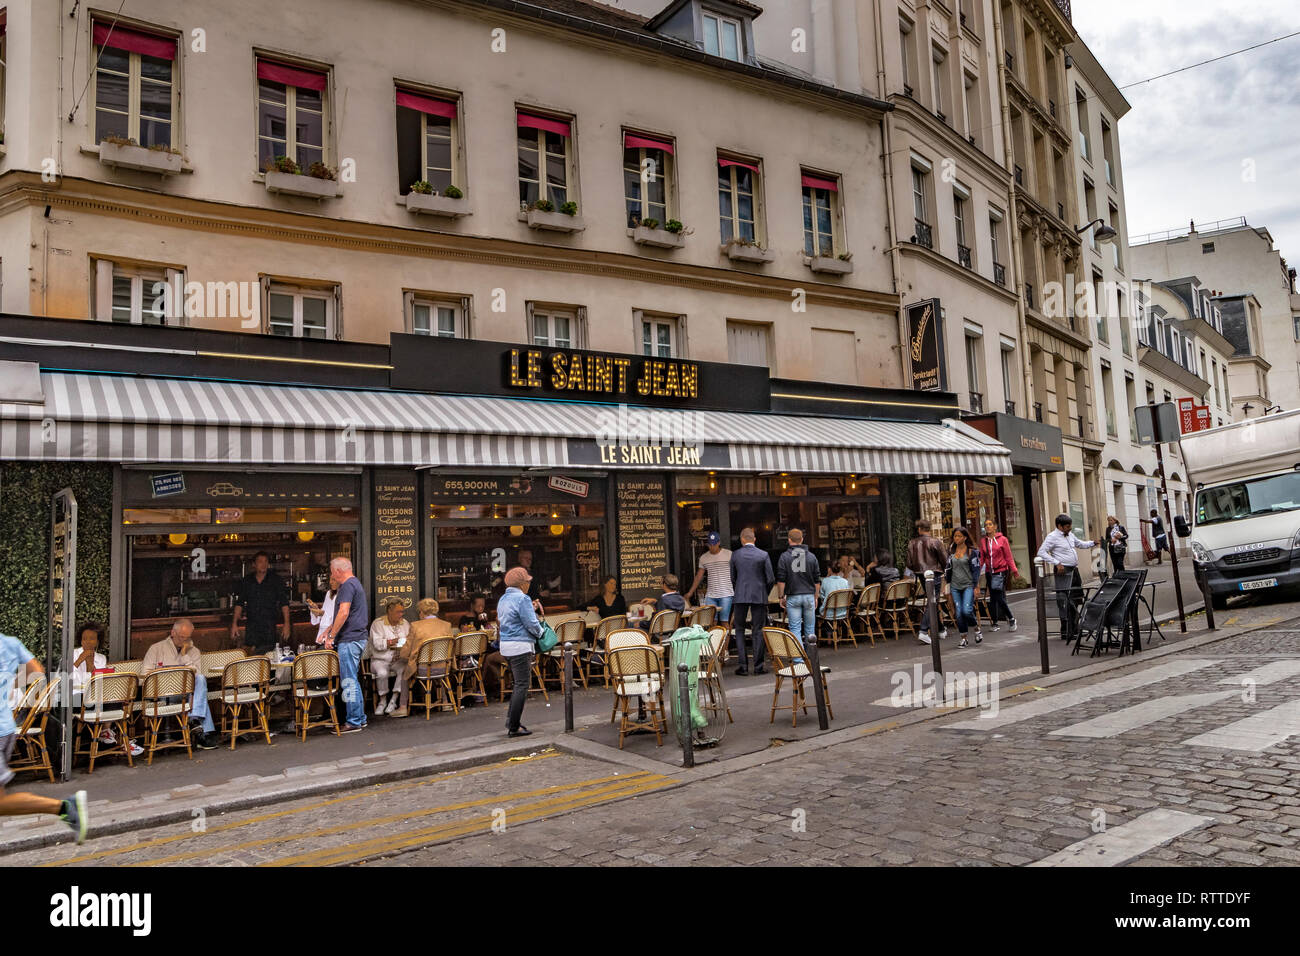 Personen, die vor dem Café-Restaurant Le Saint-Jean in der Rue des Abbesses in Montmartre, Paris, sitzen Stockfoto